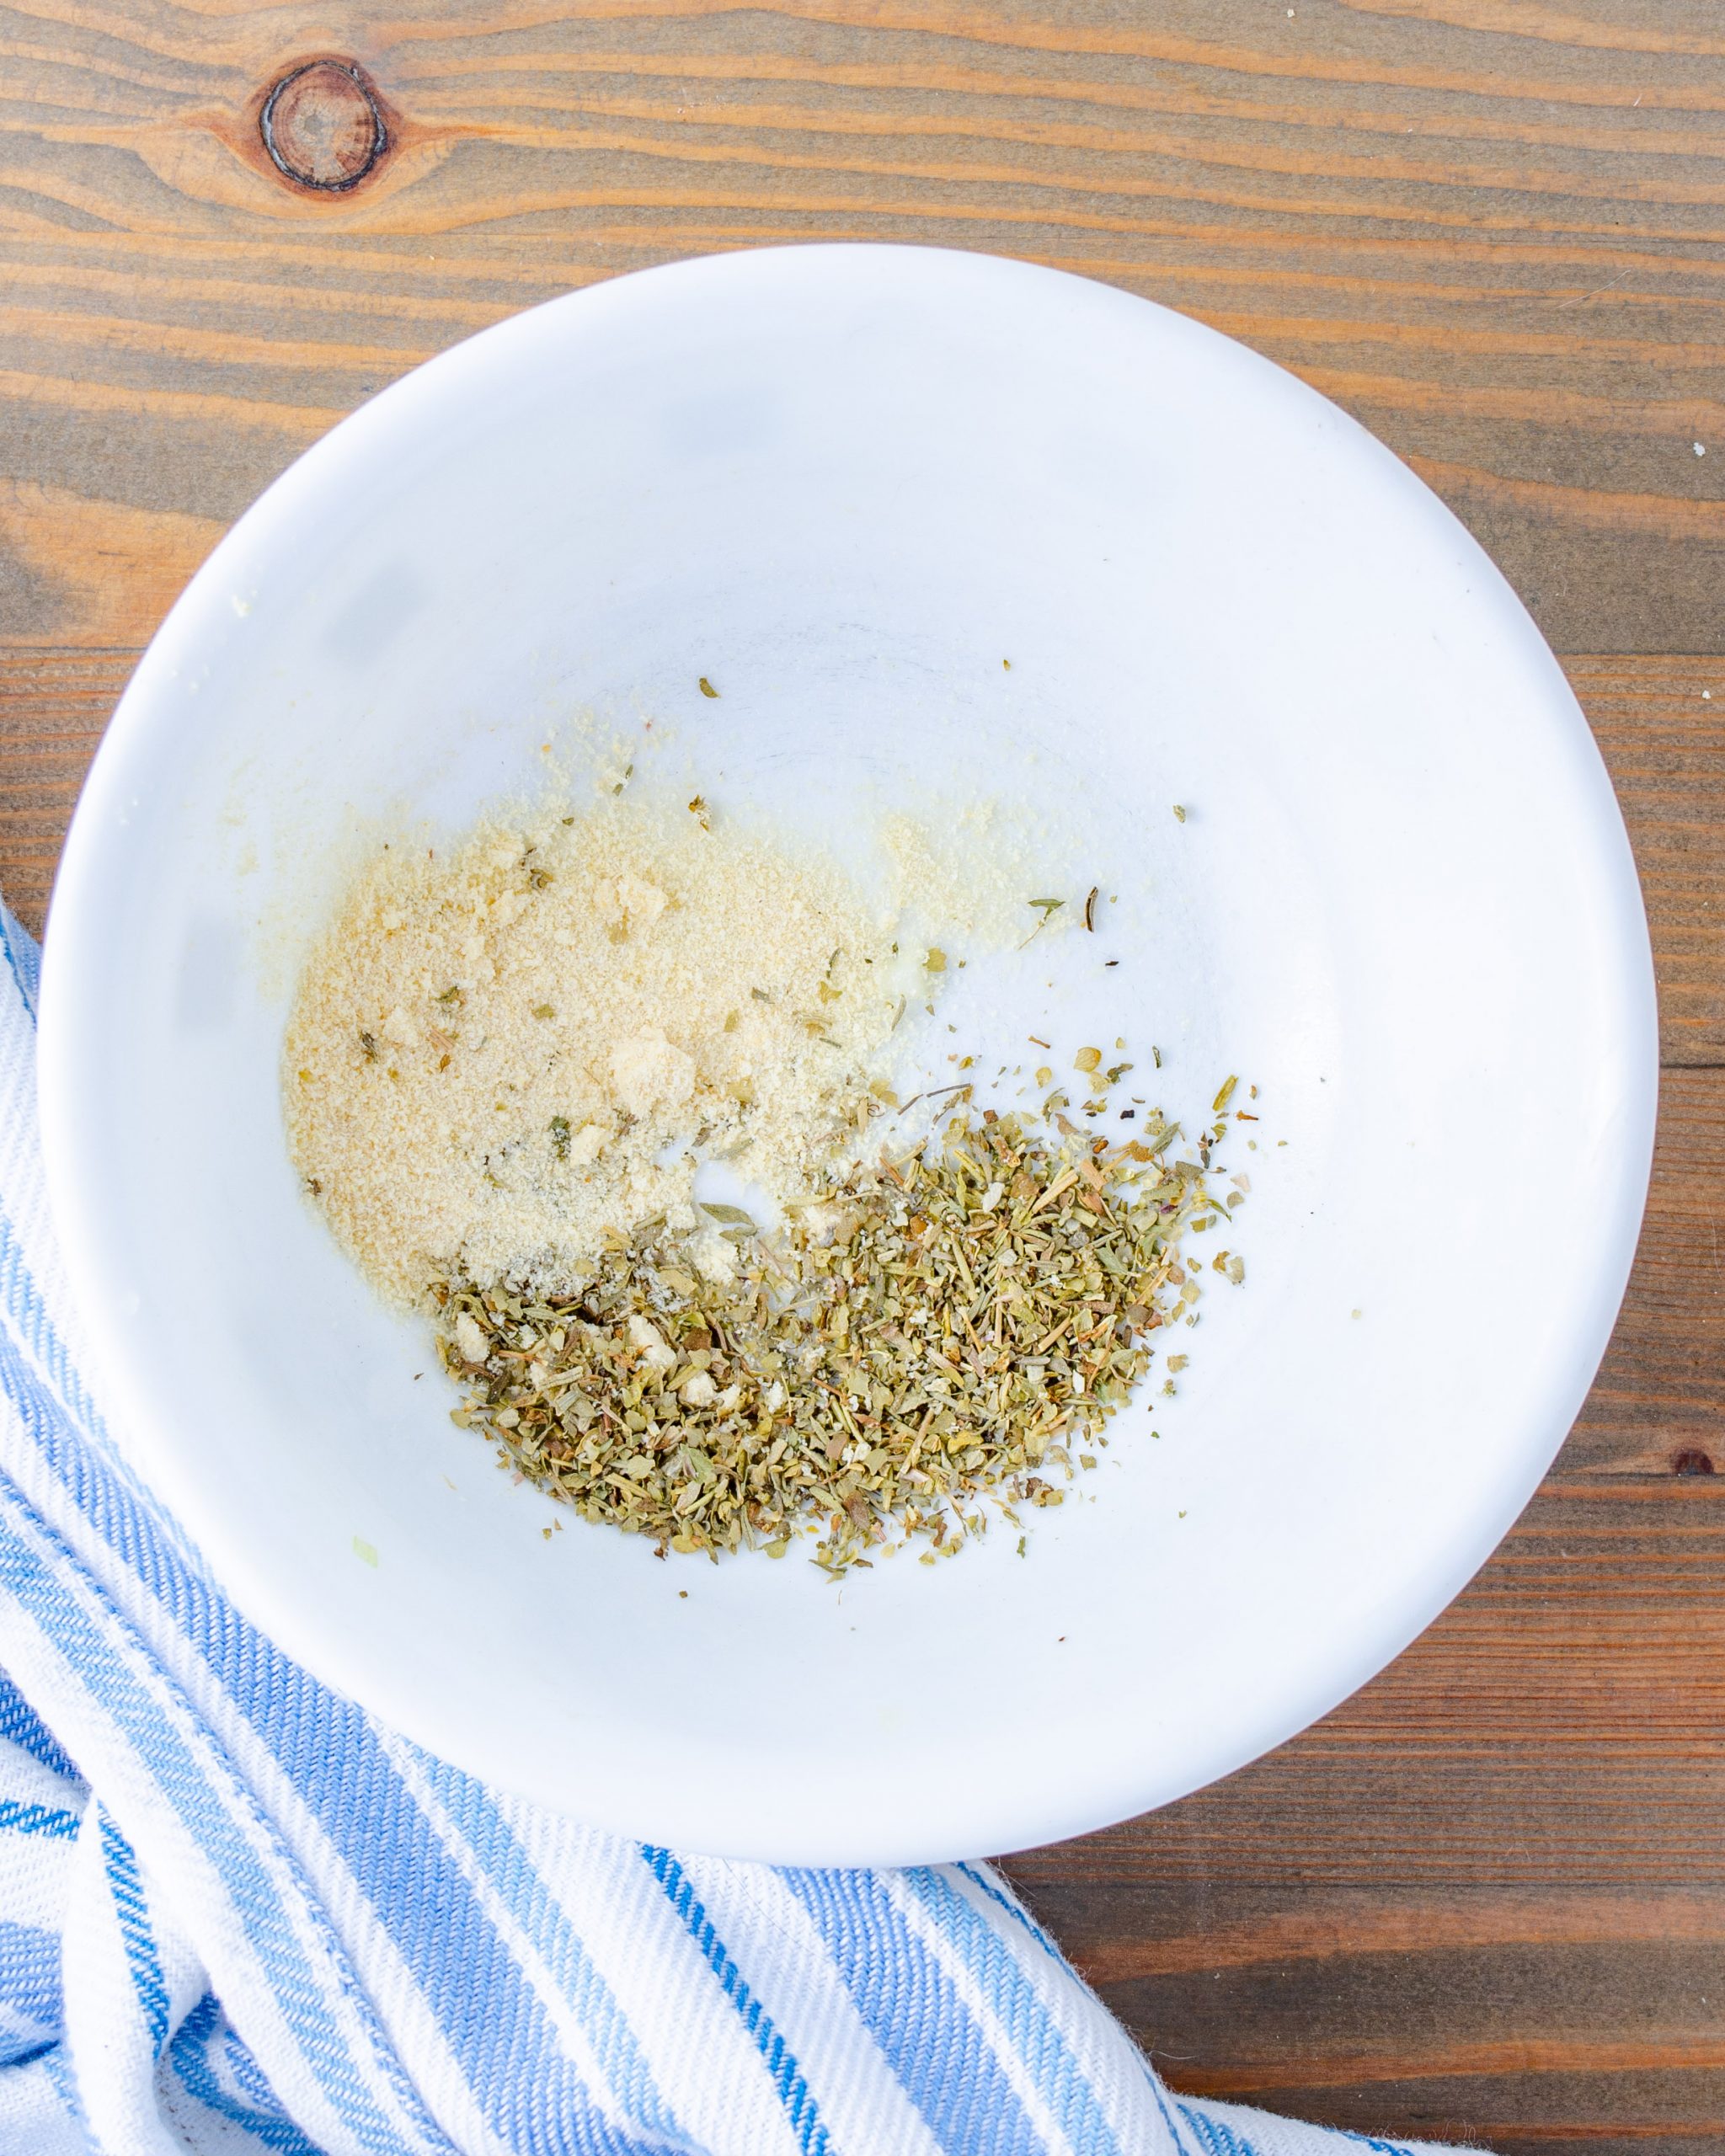 In a bowl, add oregano, onion powder, minced garlic, and salt and pepper to taste.